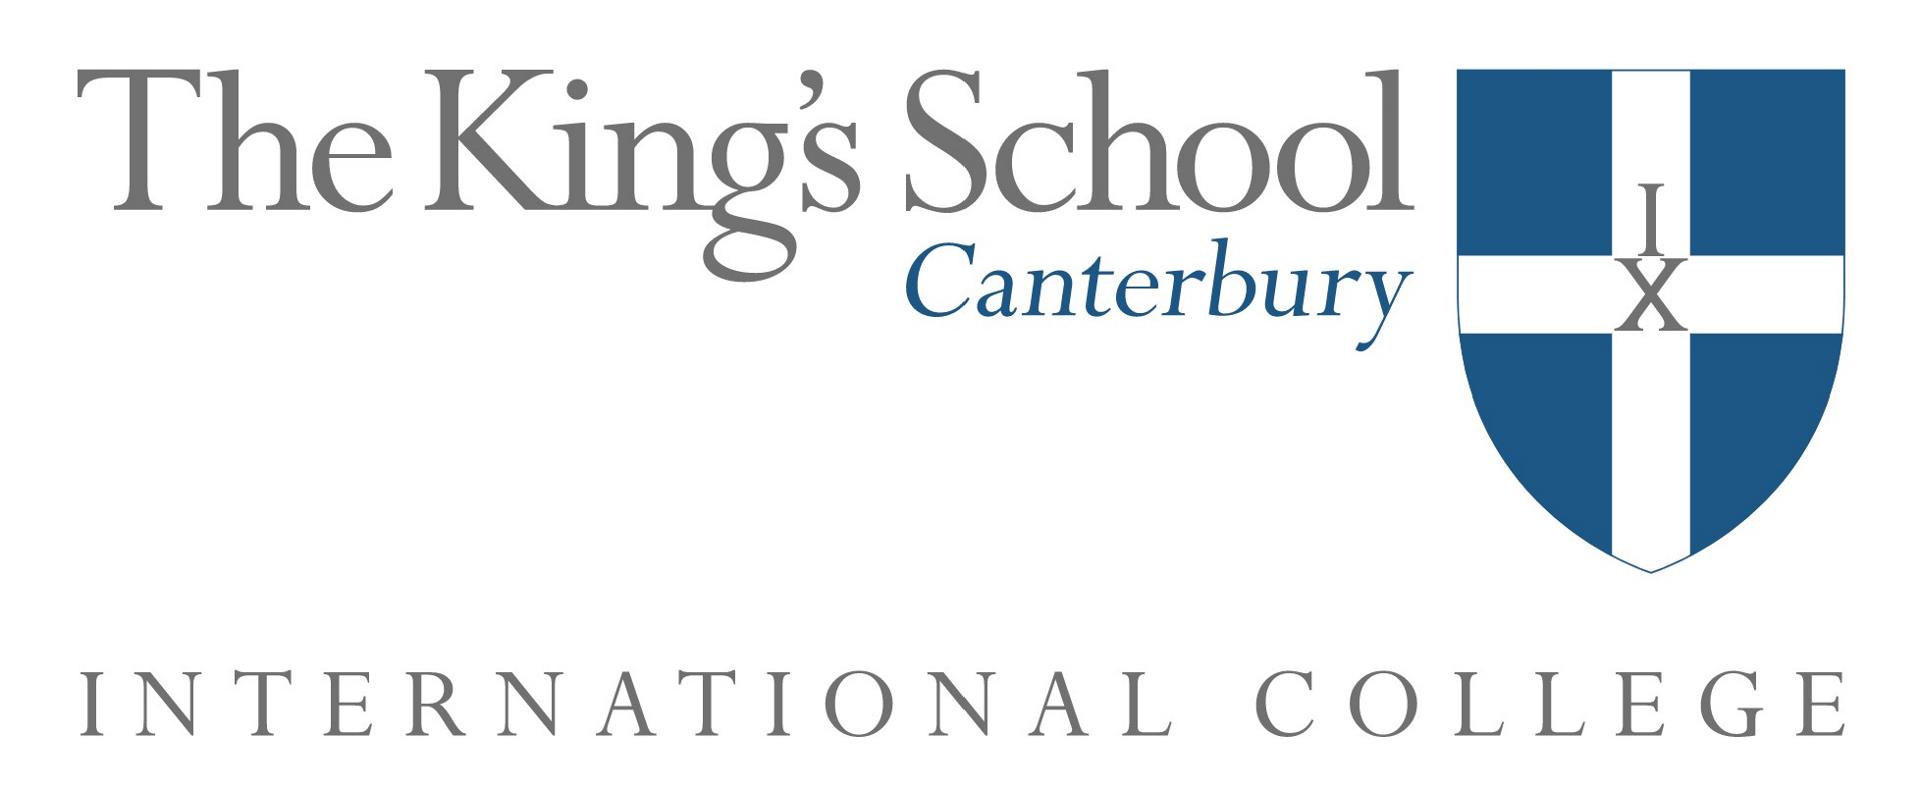 The King's School, Canterbury International College